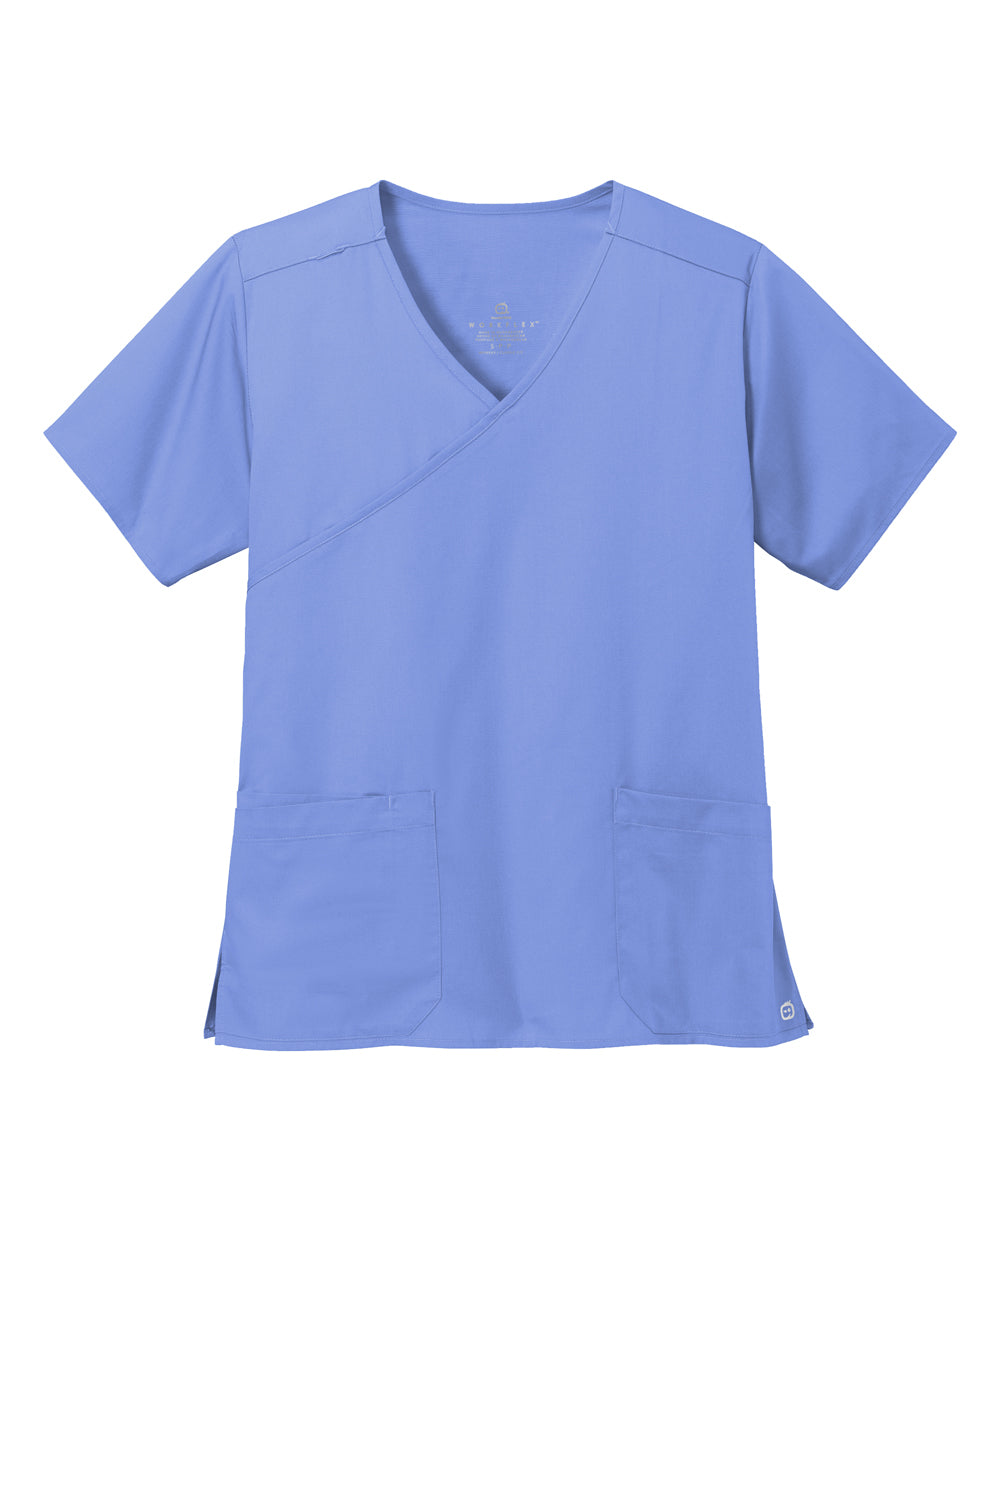 Wonderwink WW4760 WorkFlex Short Sleeve V-Neck Mock Wrap Shirt Ceil Blue Flat Front